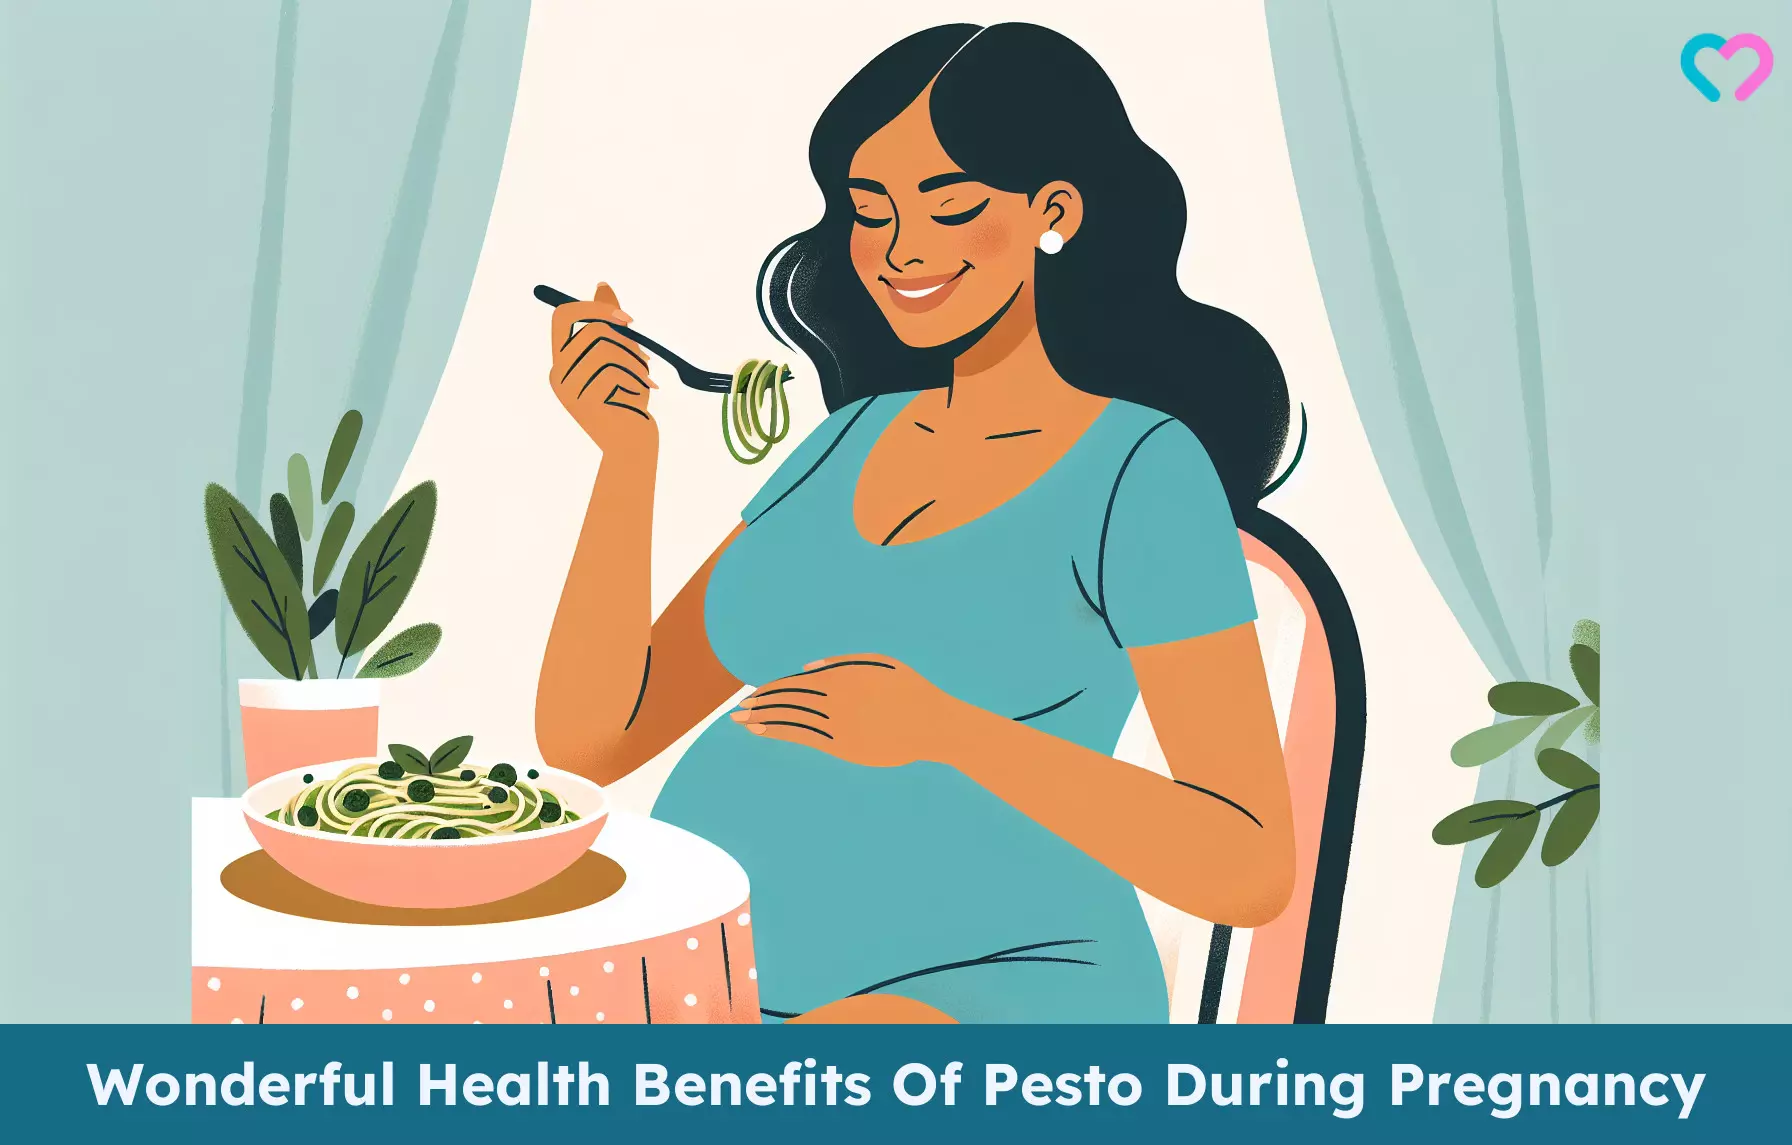 Pesto During Pregnancy_illustration